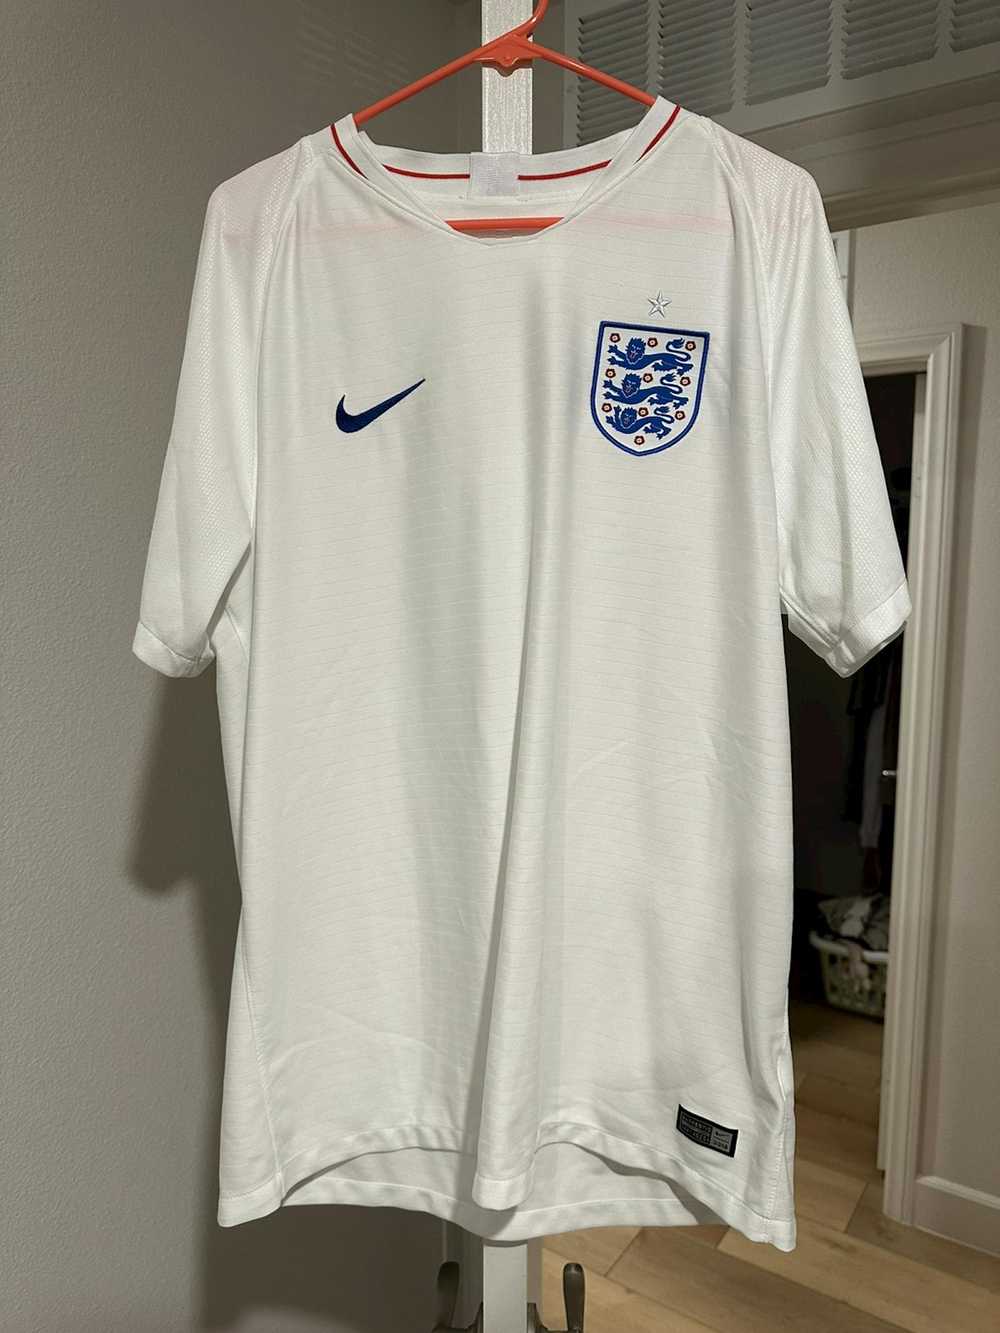 Nike Nike England Soccer Jersey - image 1